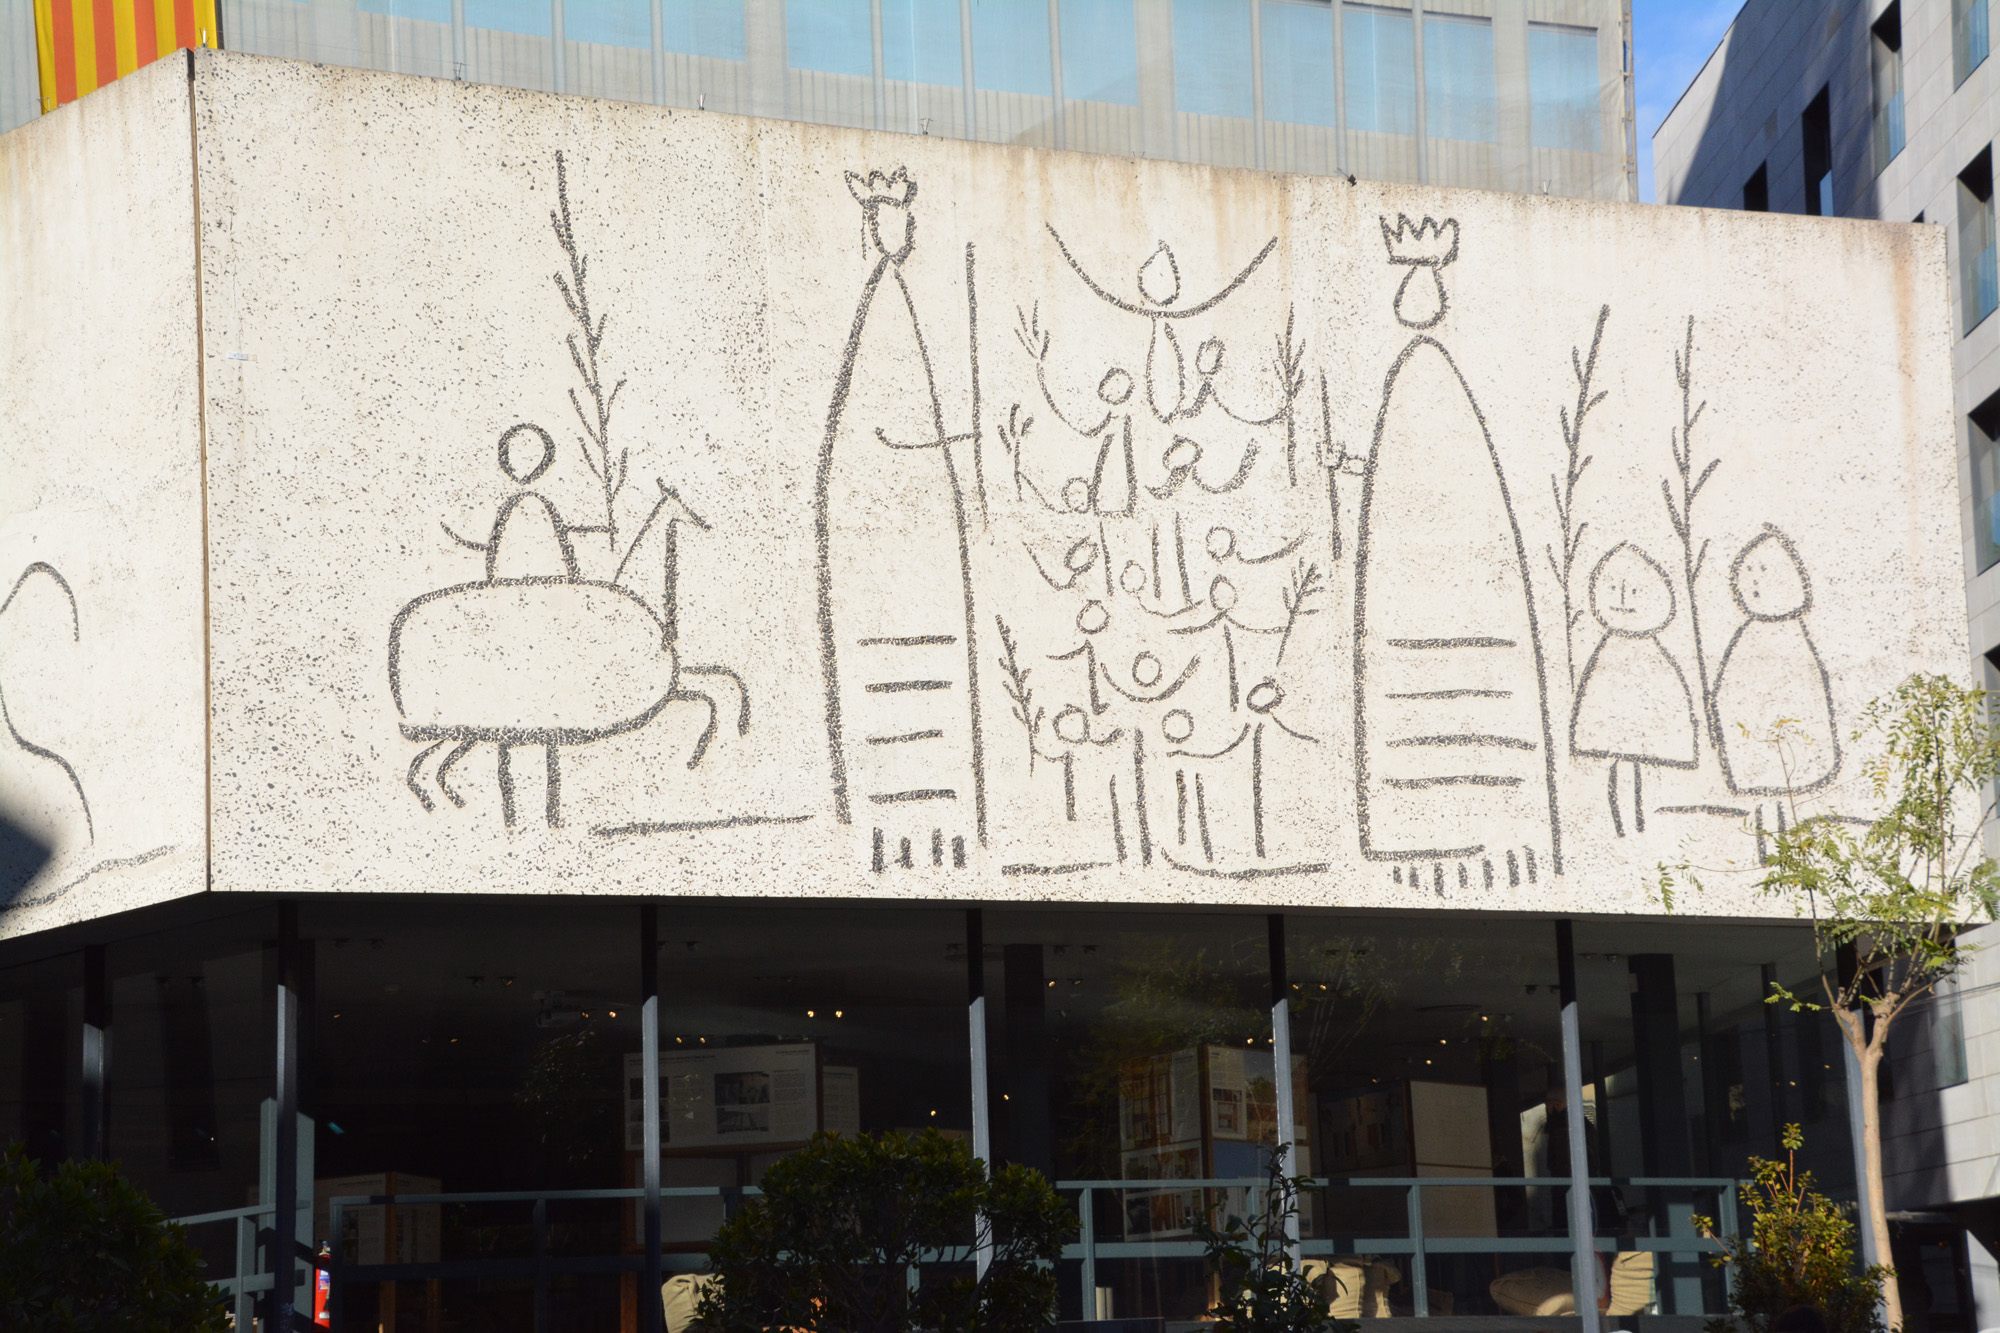 Picasso mural in Barcelona's Placa Nova